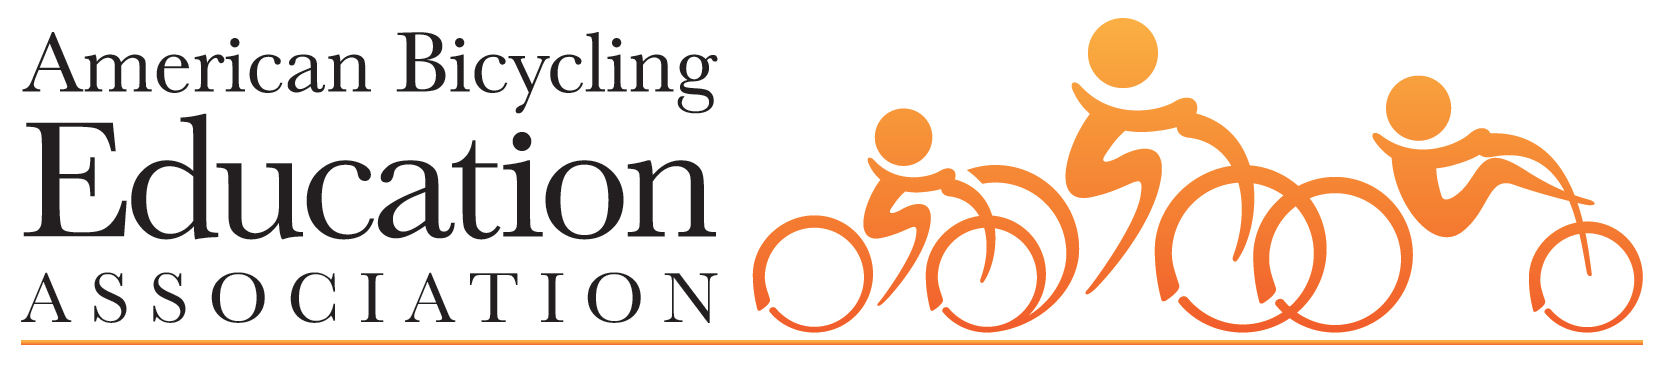 American Bicycling Education Association logo